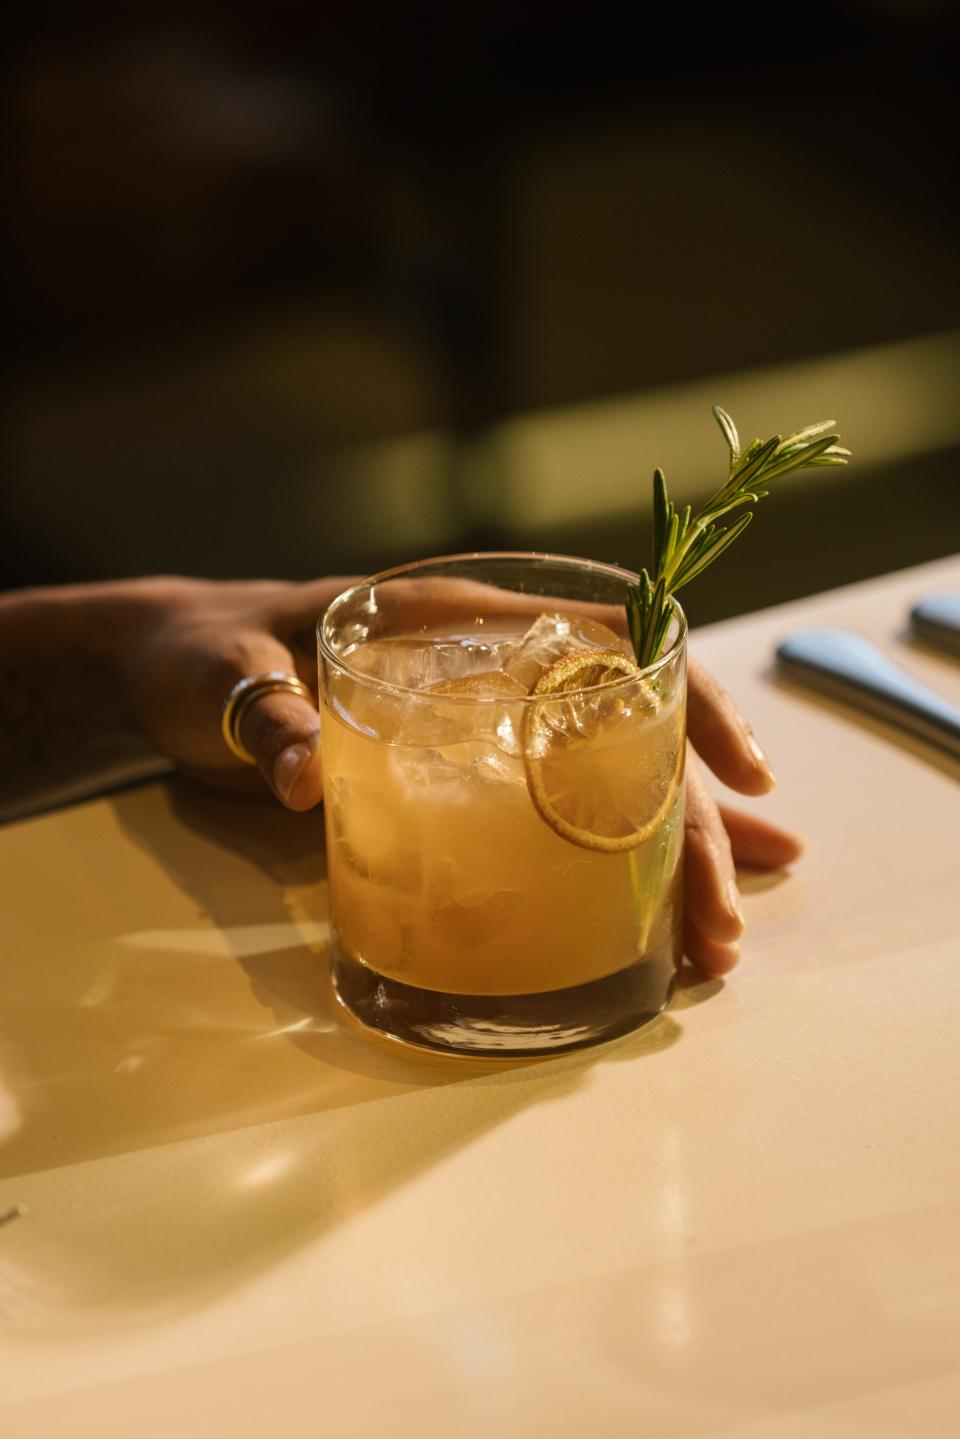 Handcrafted cocktails shine at The Radical hotel's Golden Hour restaurant bar.